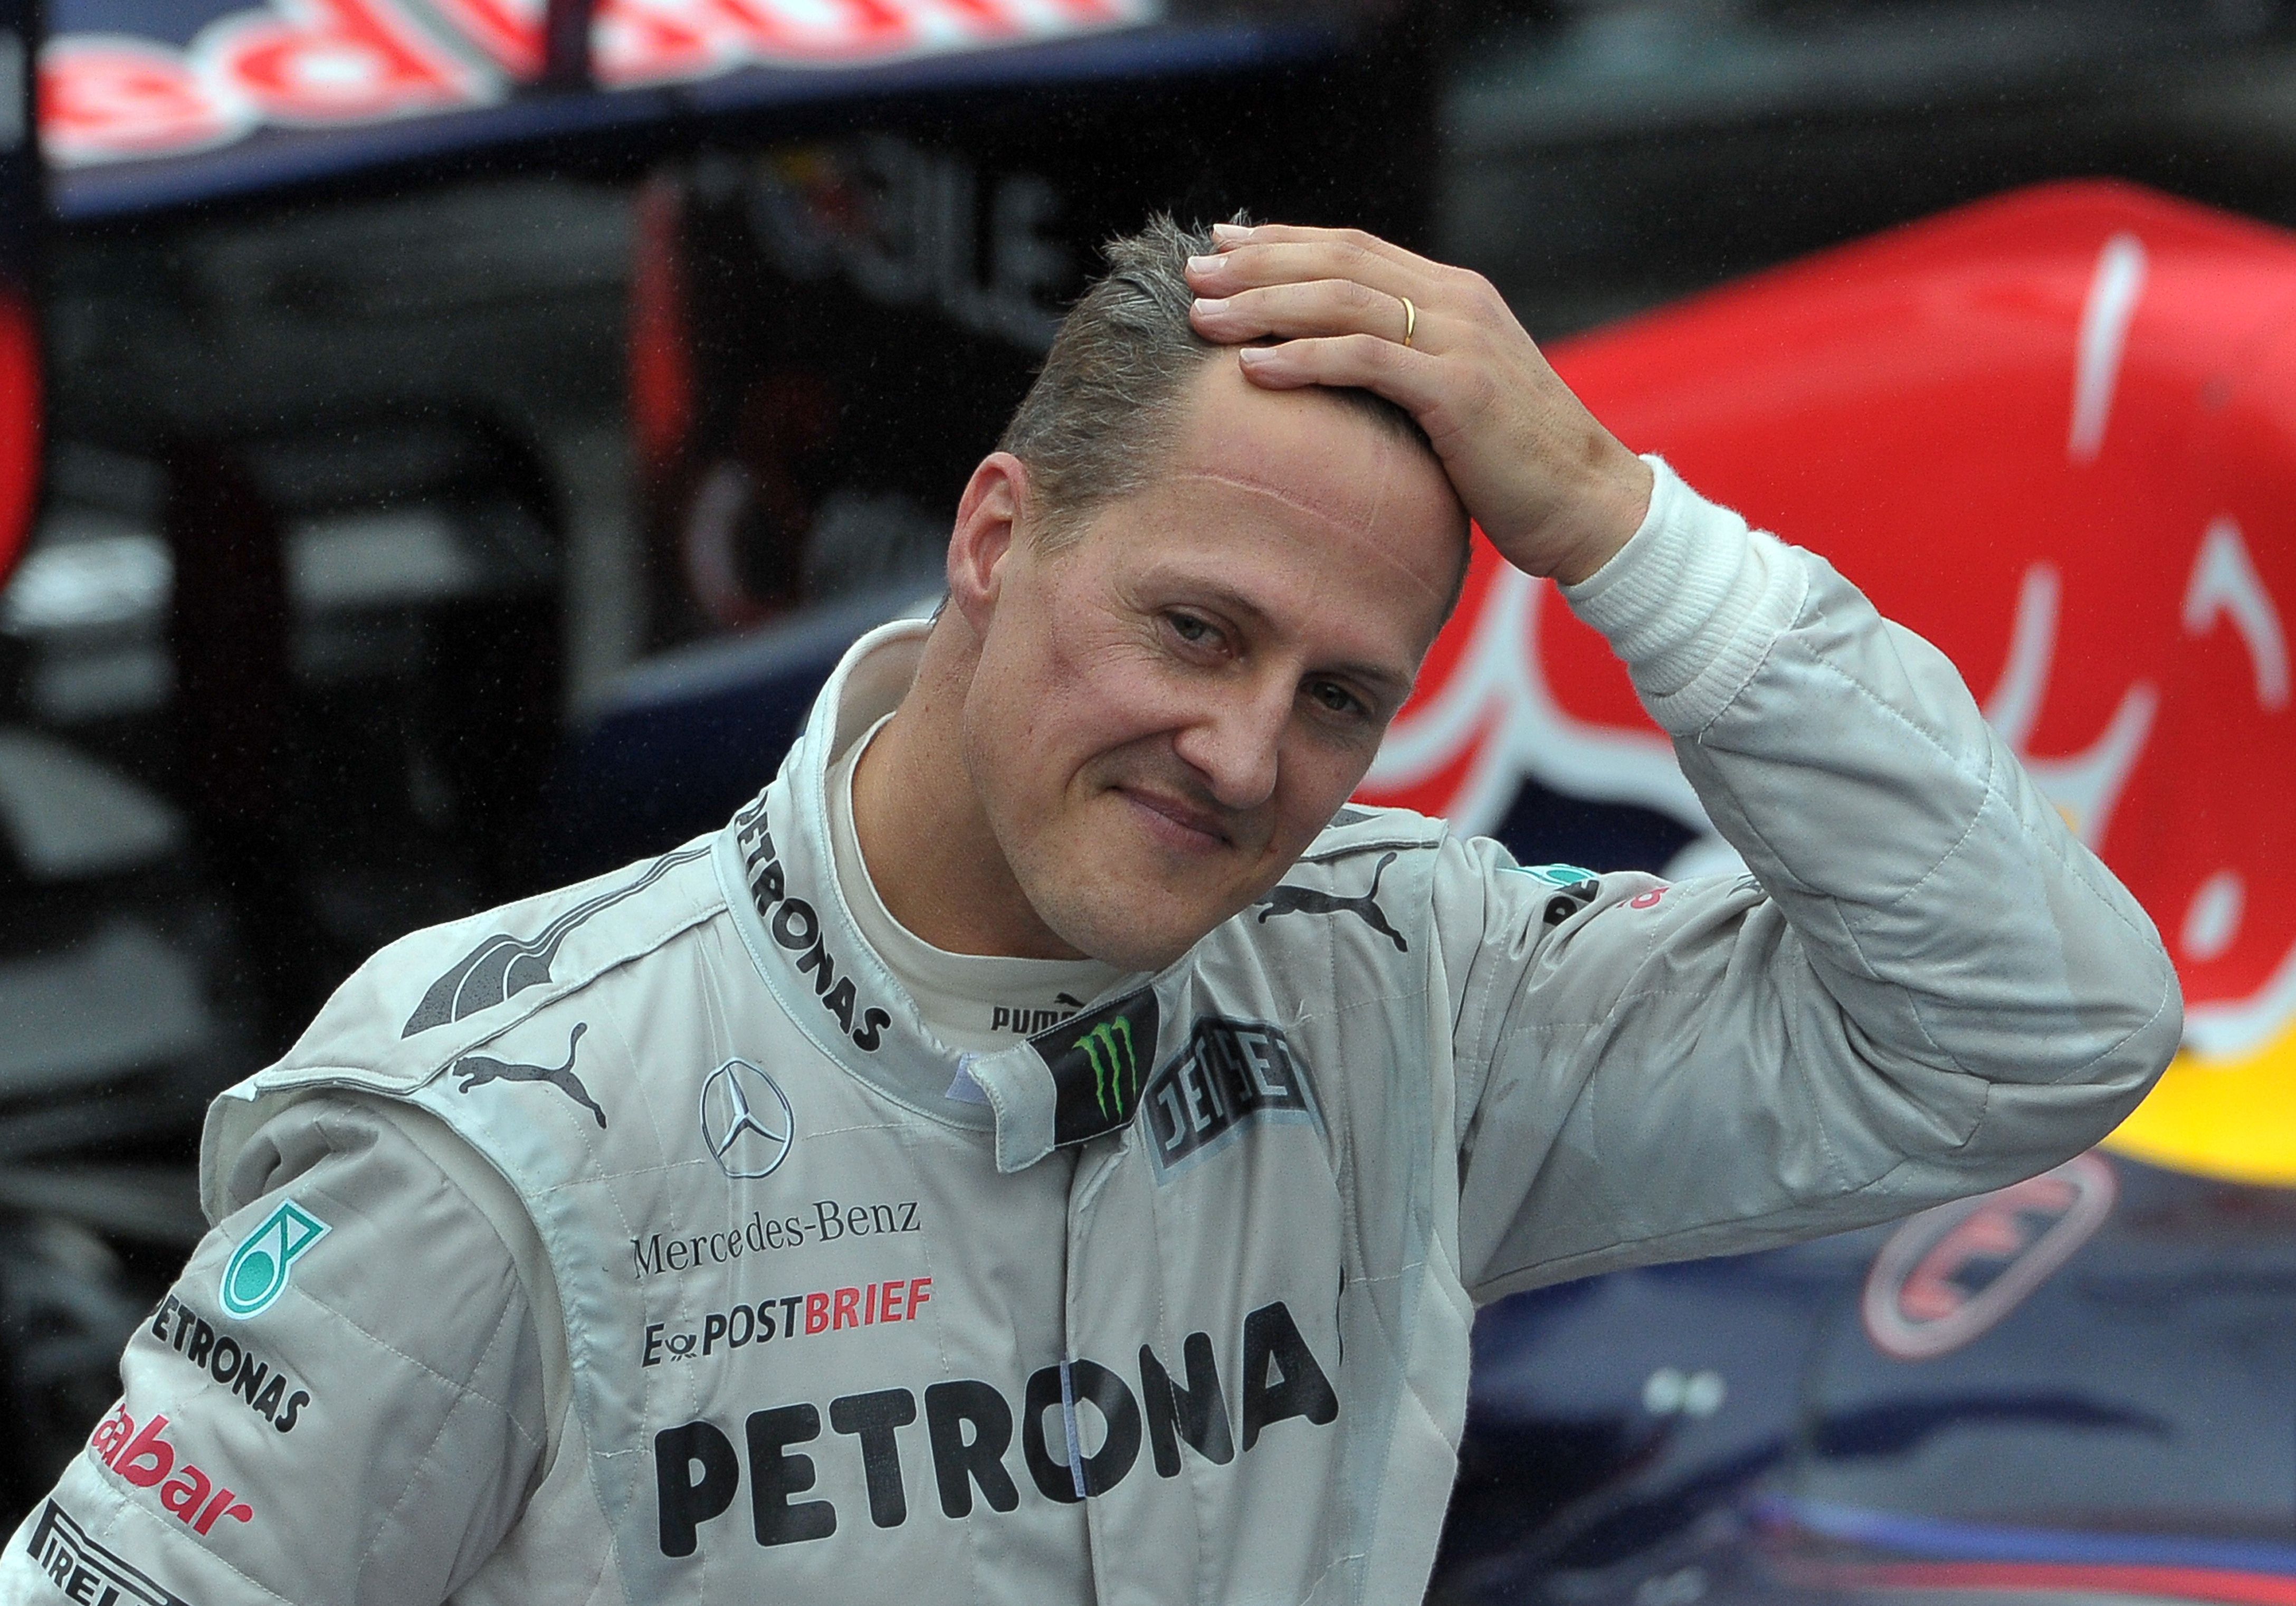 Medicii francezi ar incerca sa il trezeasca treptat din coma pe Michael Schumacher. Familia nu confirma insa informatia